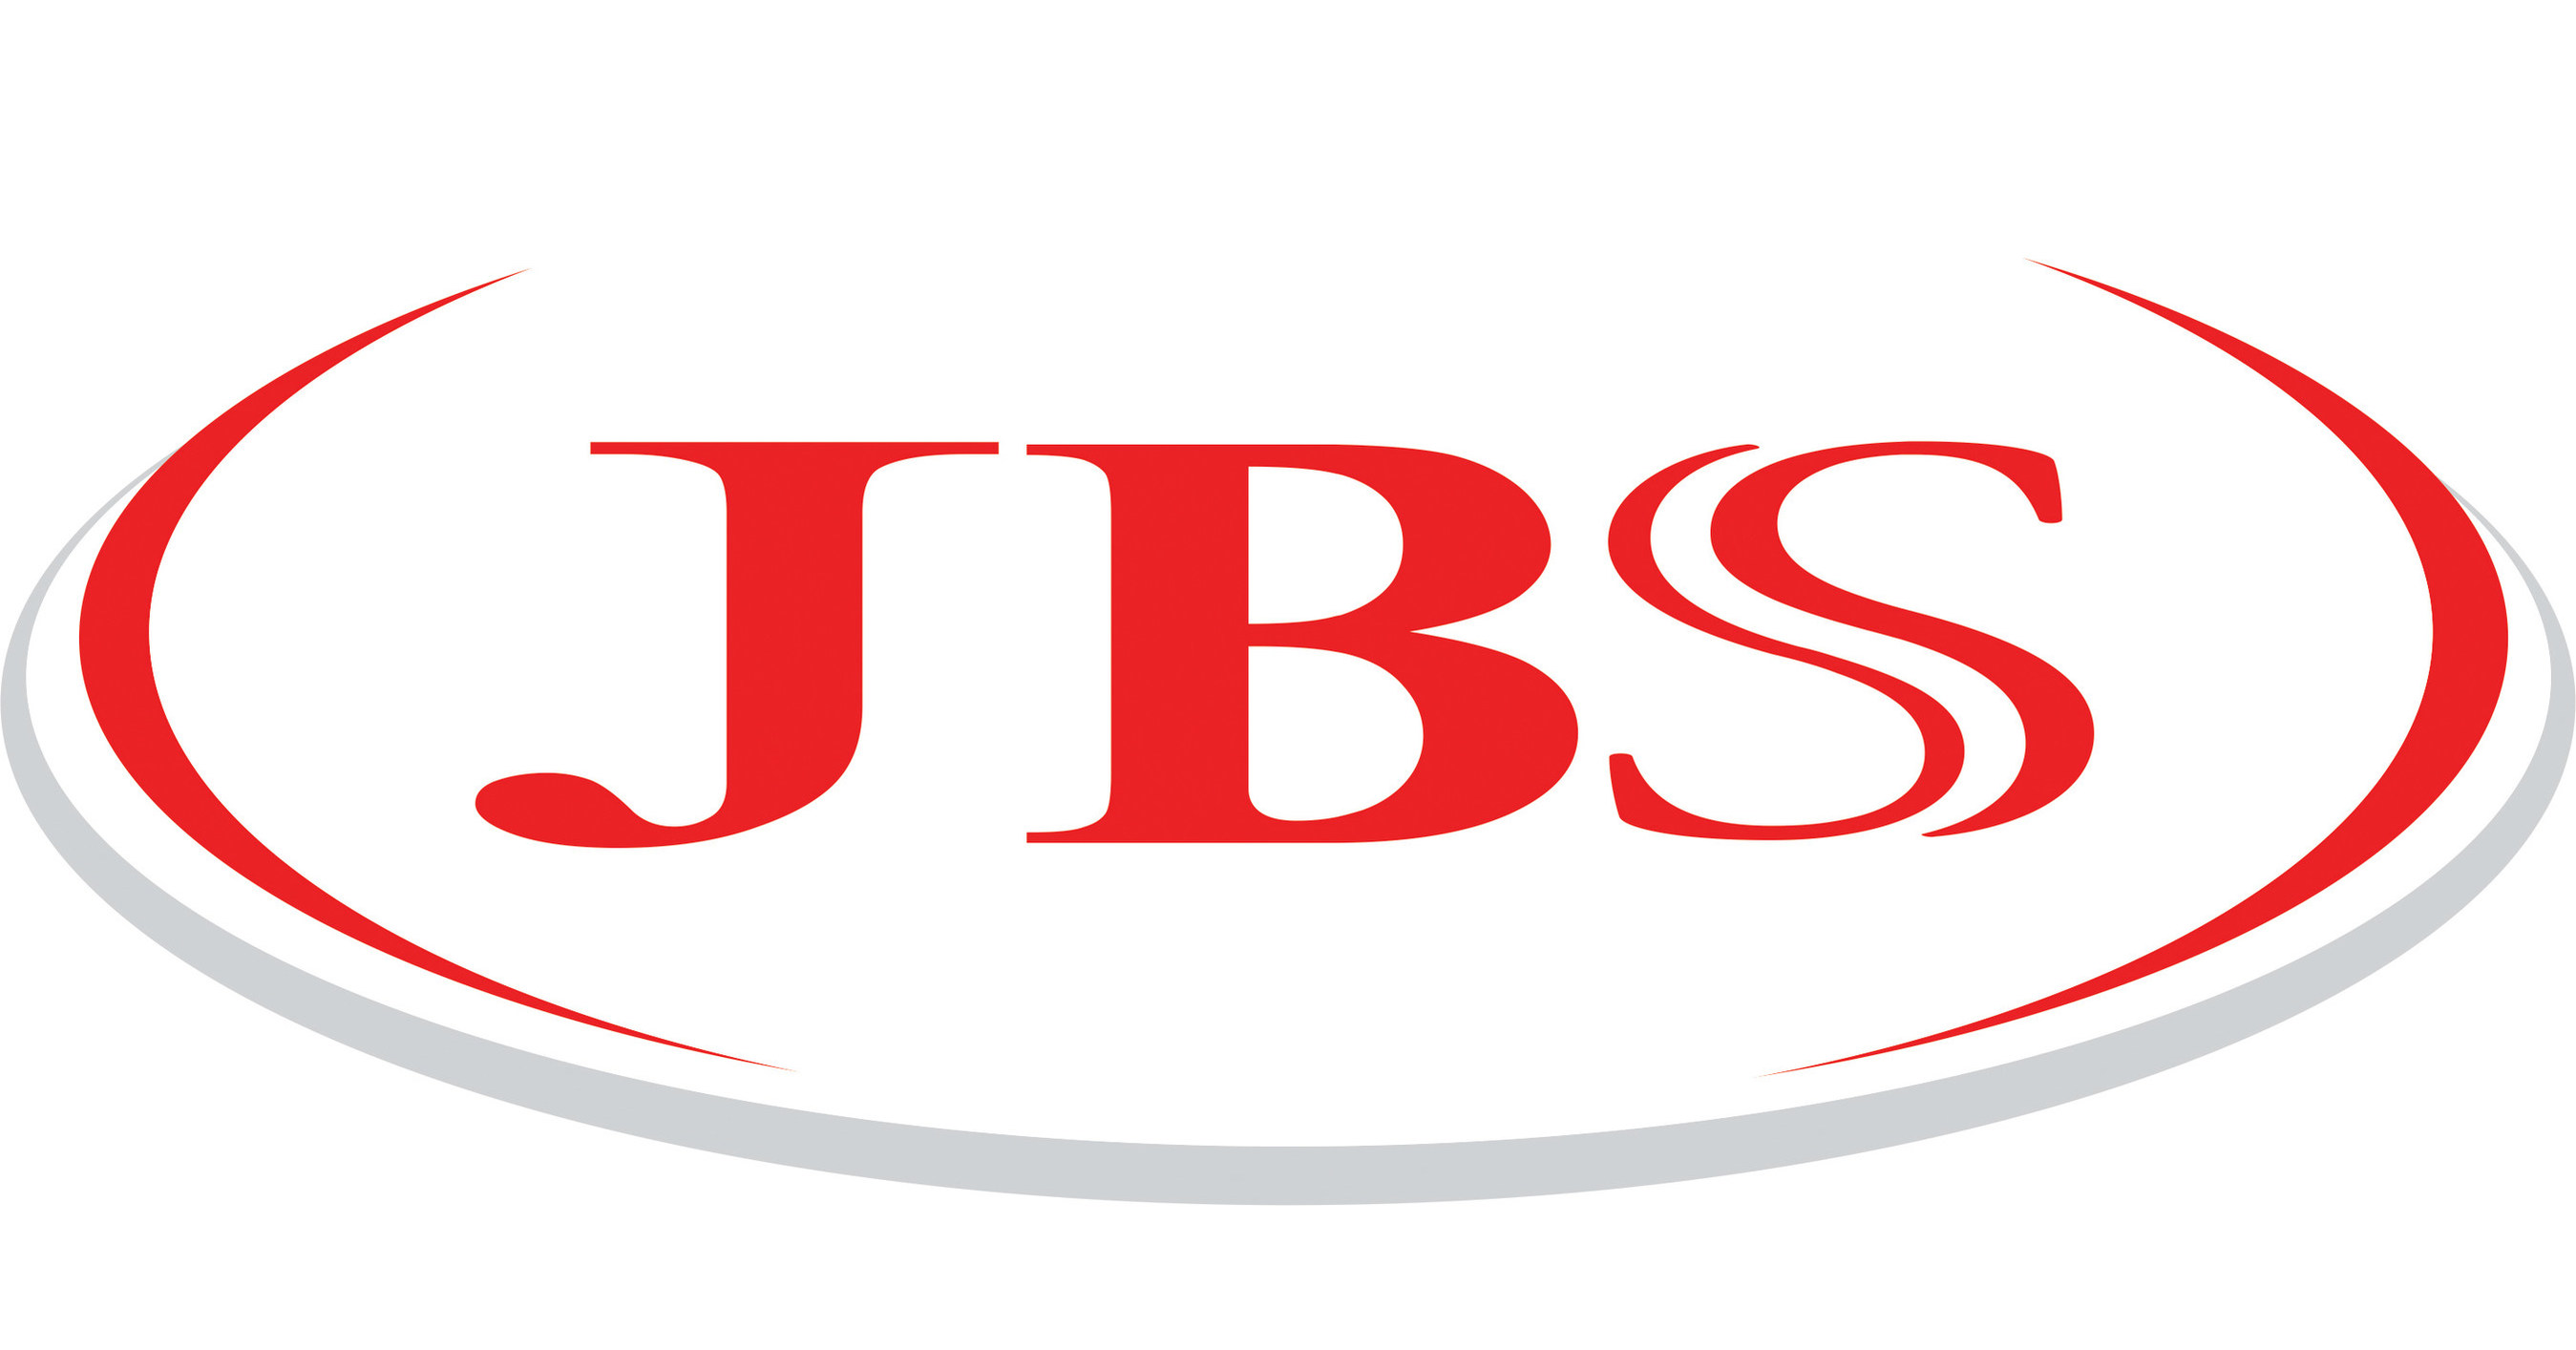 https://mma.prnewswire.com/media/1090383/JBS_Logo.jpg?p=facebook